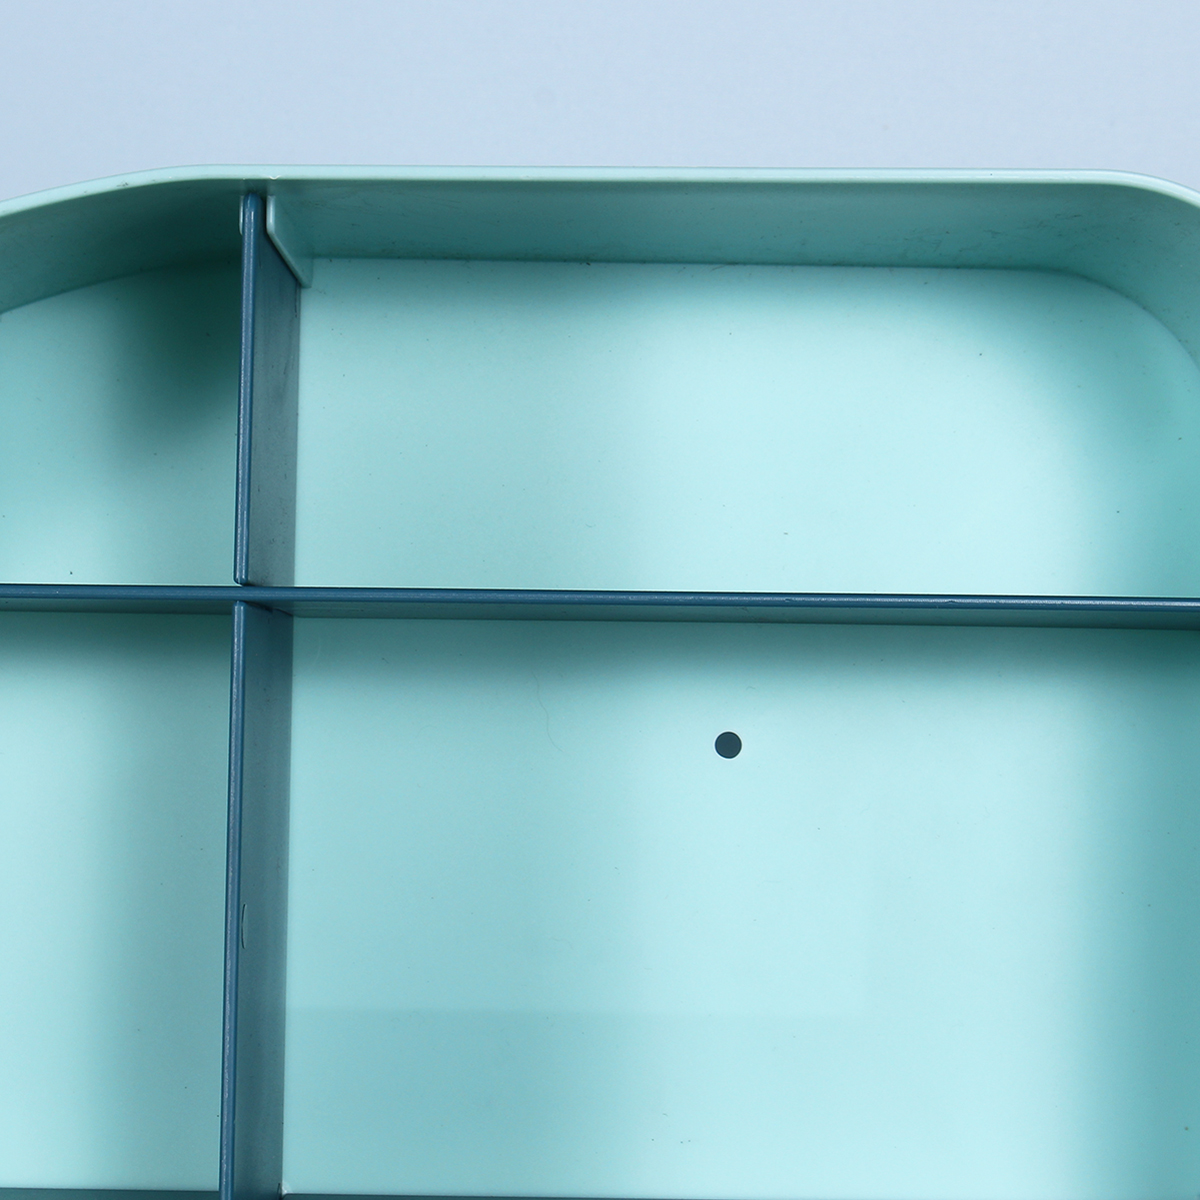 Floating-Cube-Shelves-Wall-Shelf-Hanging-Storage-Display-Bracket-Decor-Shelving-1561560-9